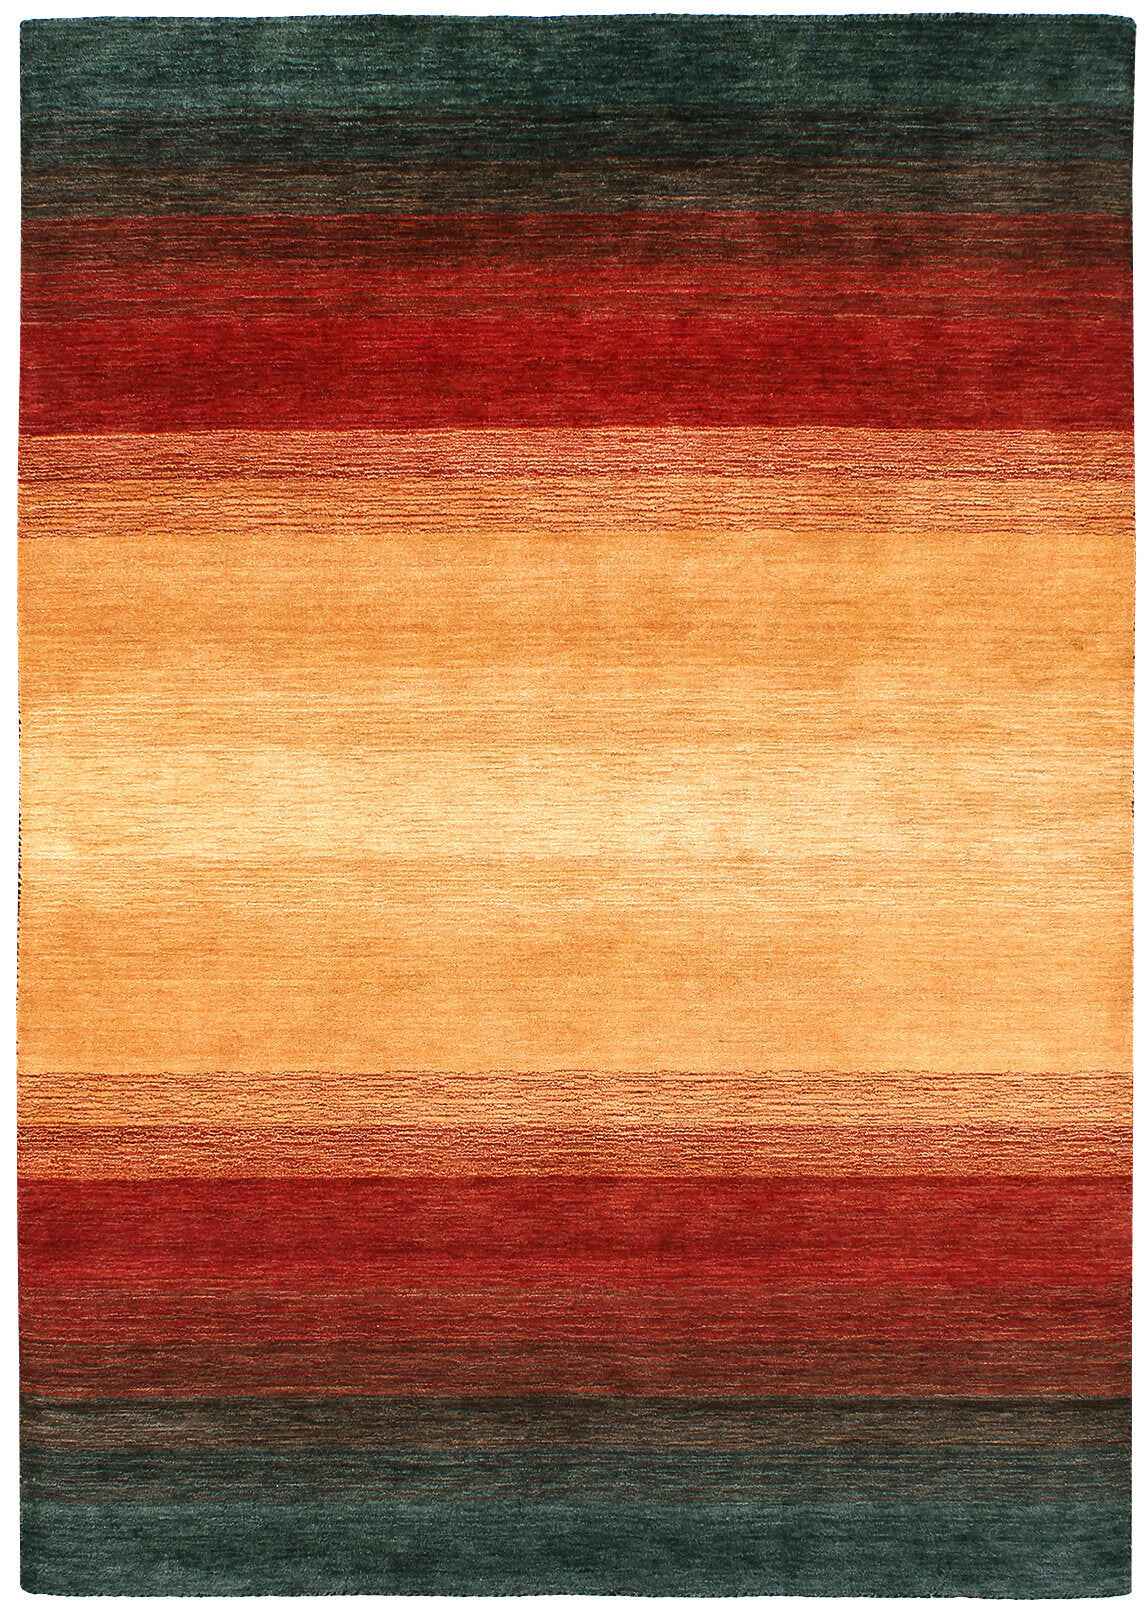 300x250 cm  Indian Wool Multicolor Rug-6029, Natural Grey